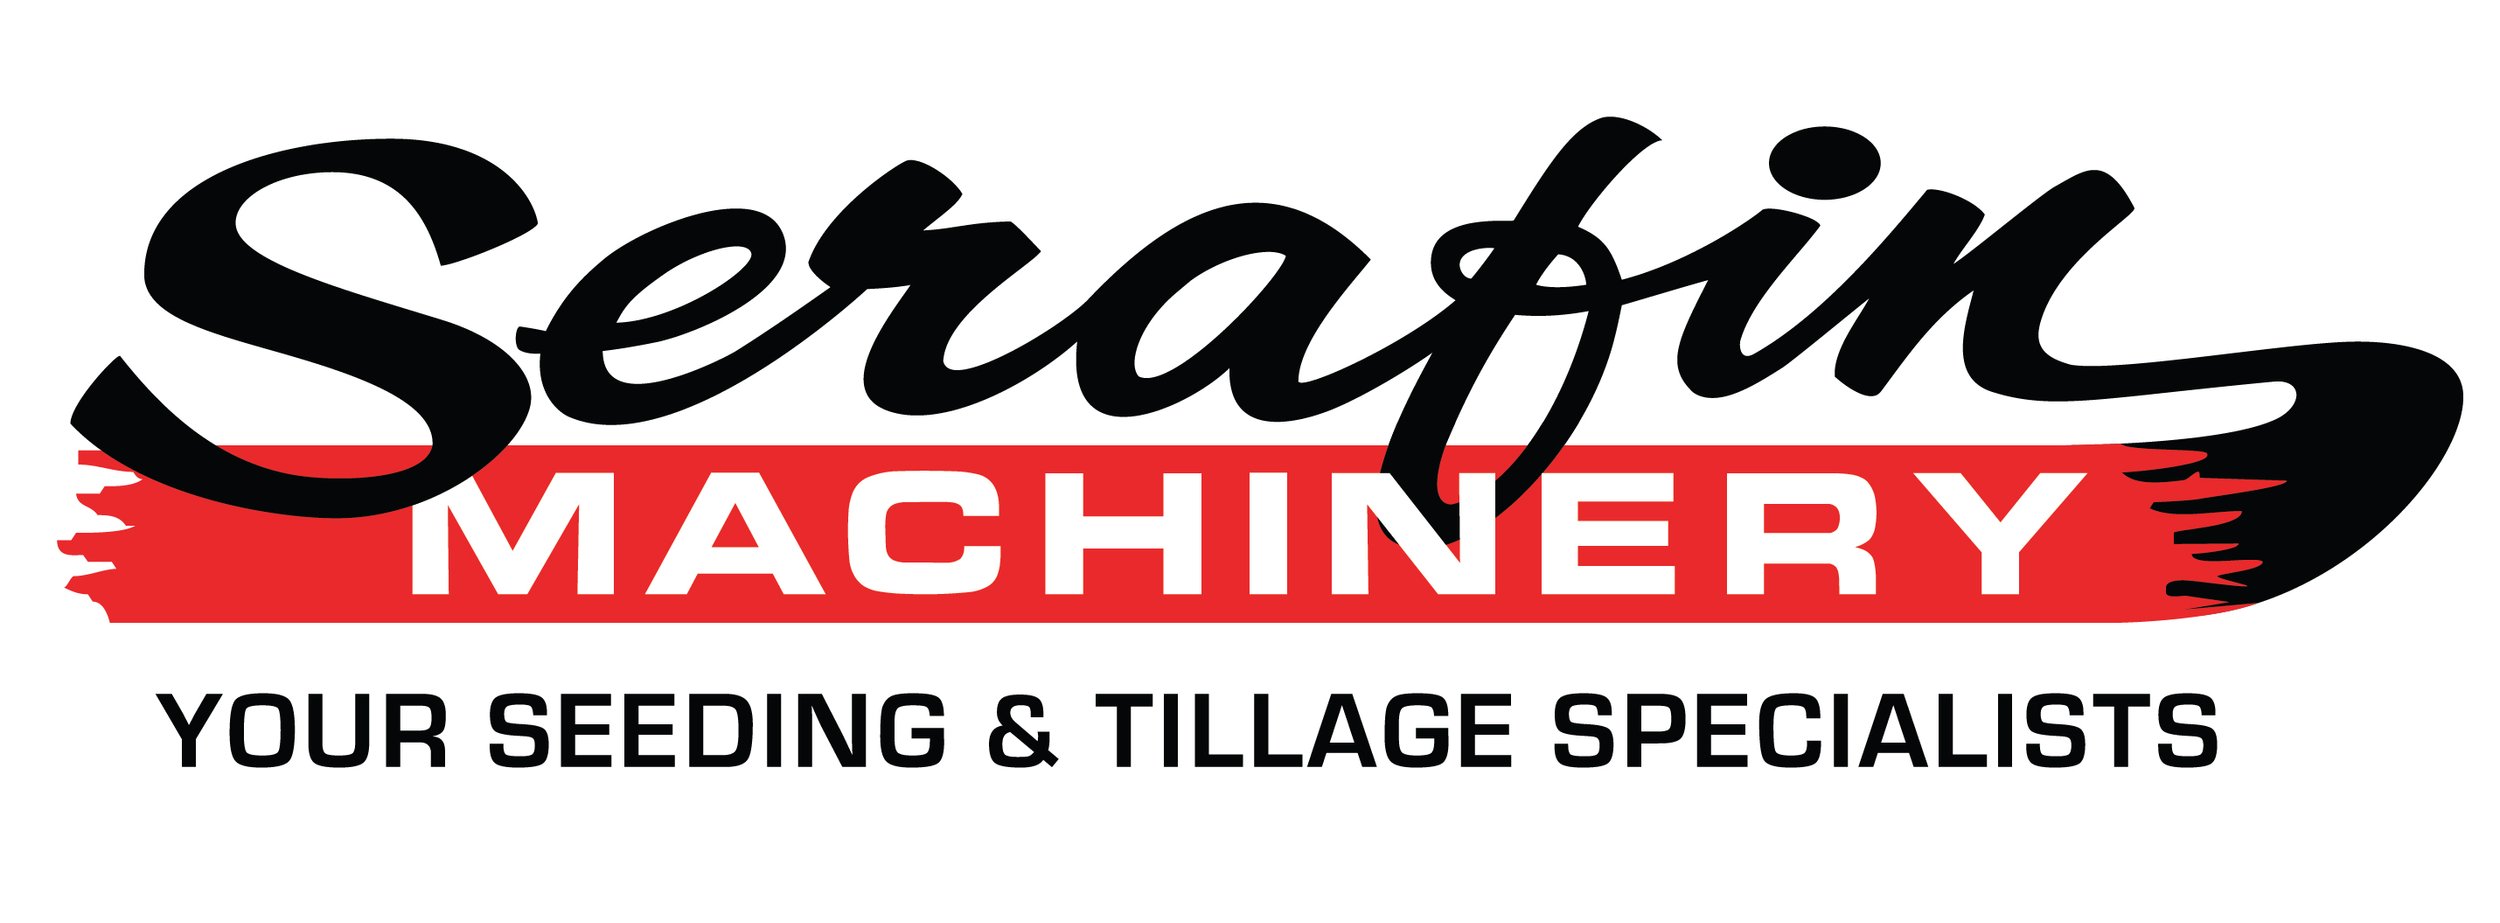 Serafin Machinery Logo_with tagline.jpg